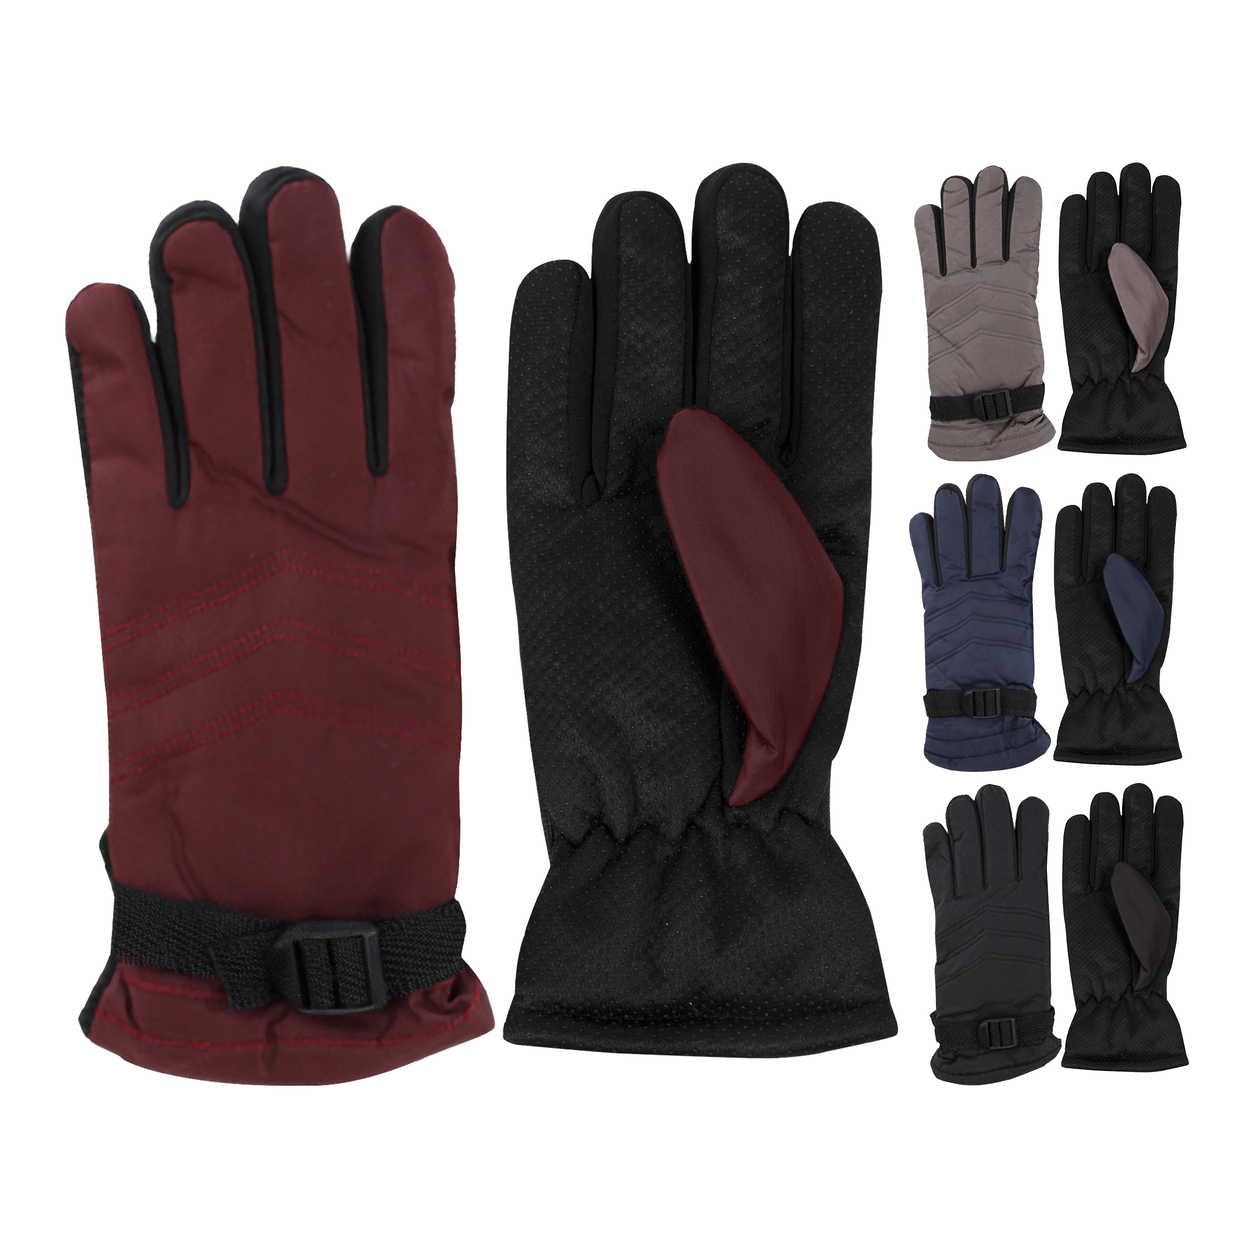 2-Pairs Women's Cozy Fur Lined Snow Ski Warm Winter Gloves - Black/black